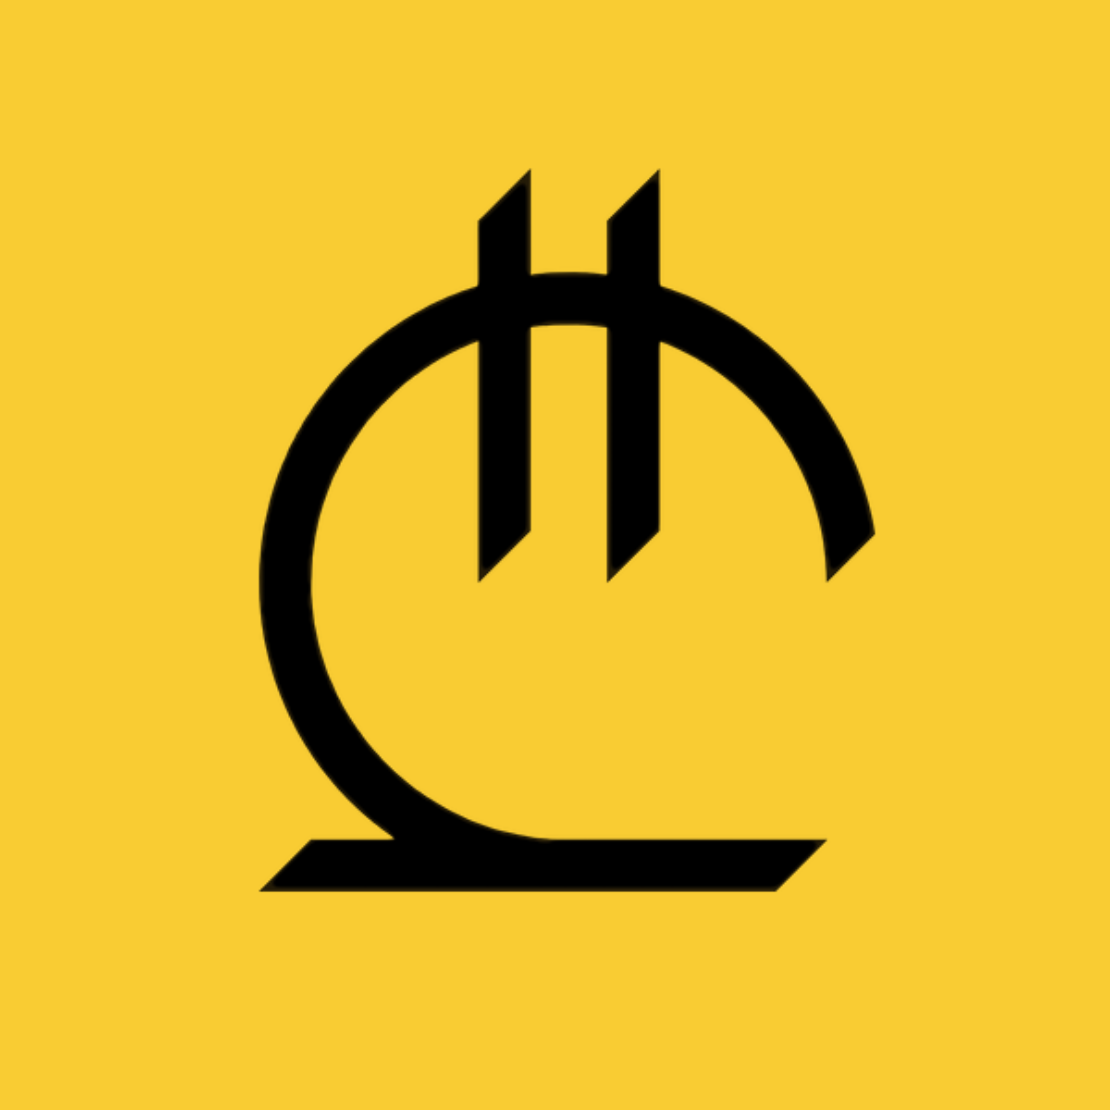 The Georgian Lari currency symbol